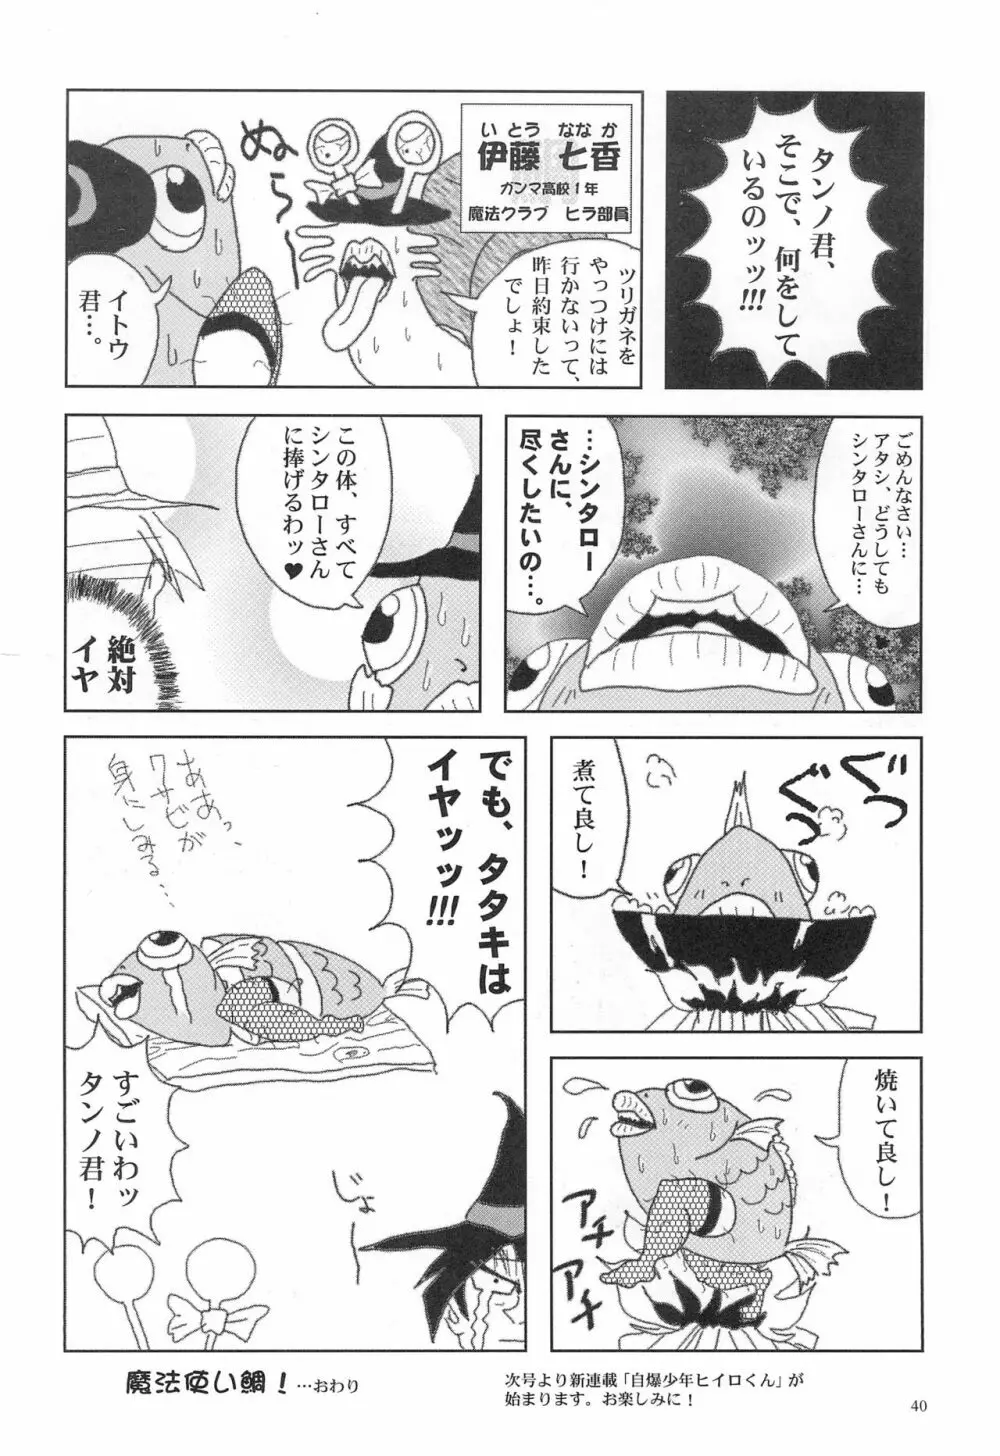 閃虹丸作品集 Vol.1 40ページ